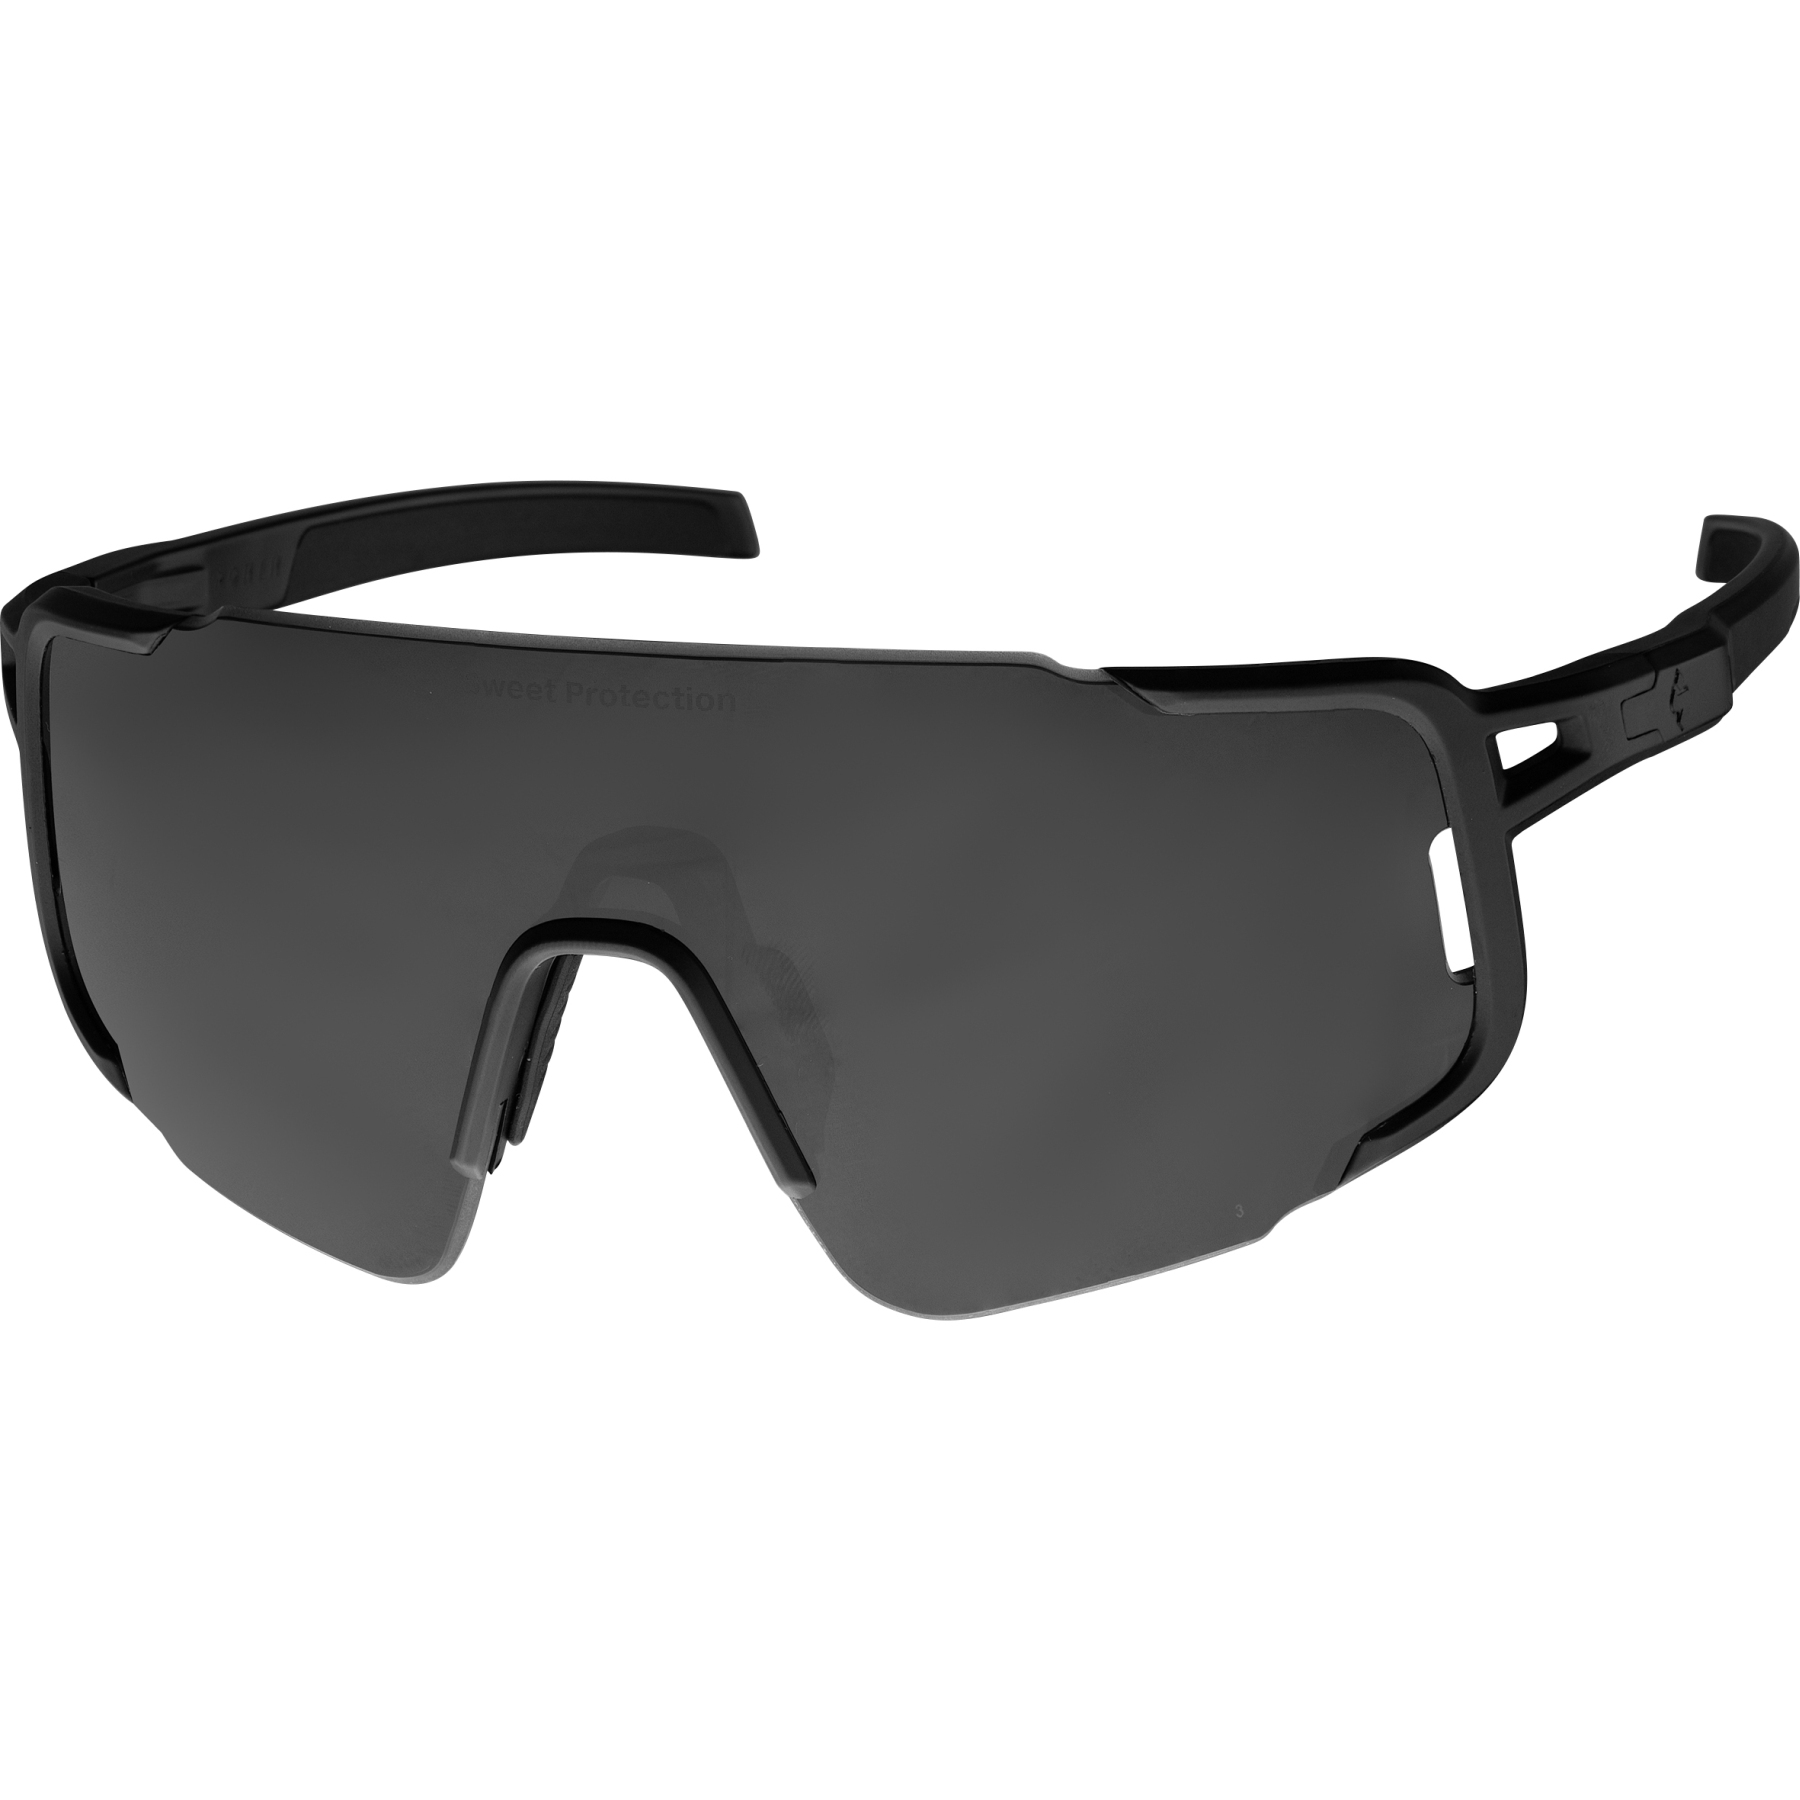 Produktbild von SWEET Protection Ronin Max Polarized Brille - Obsidian Black Polarized/Matte Black